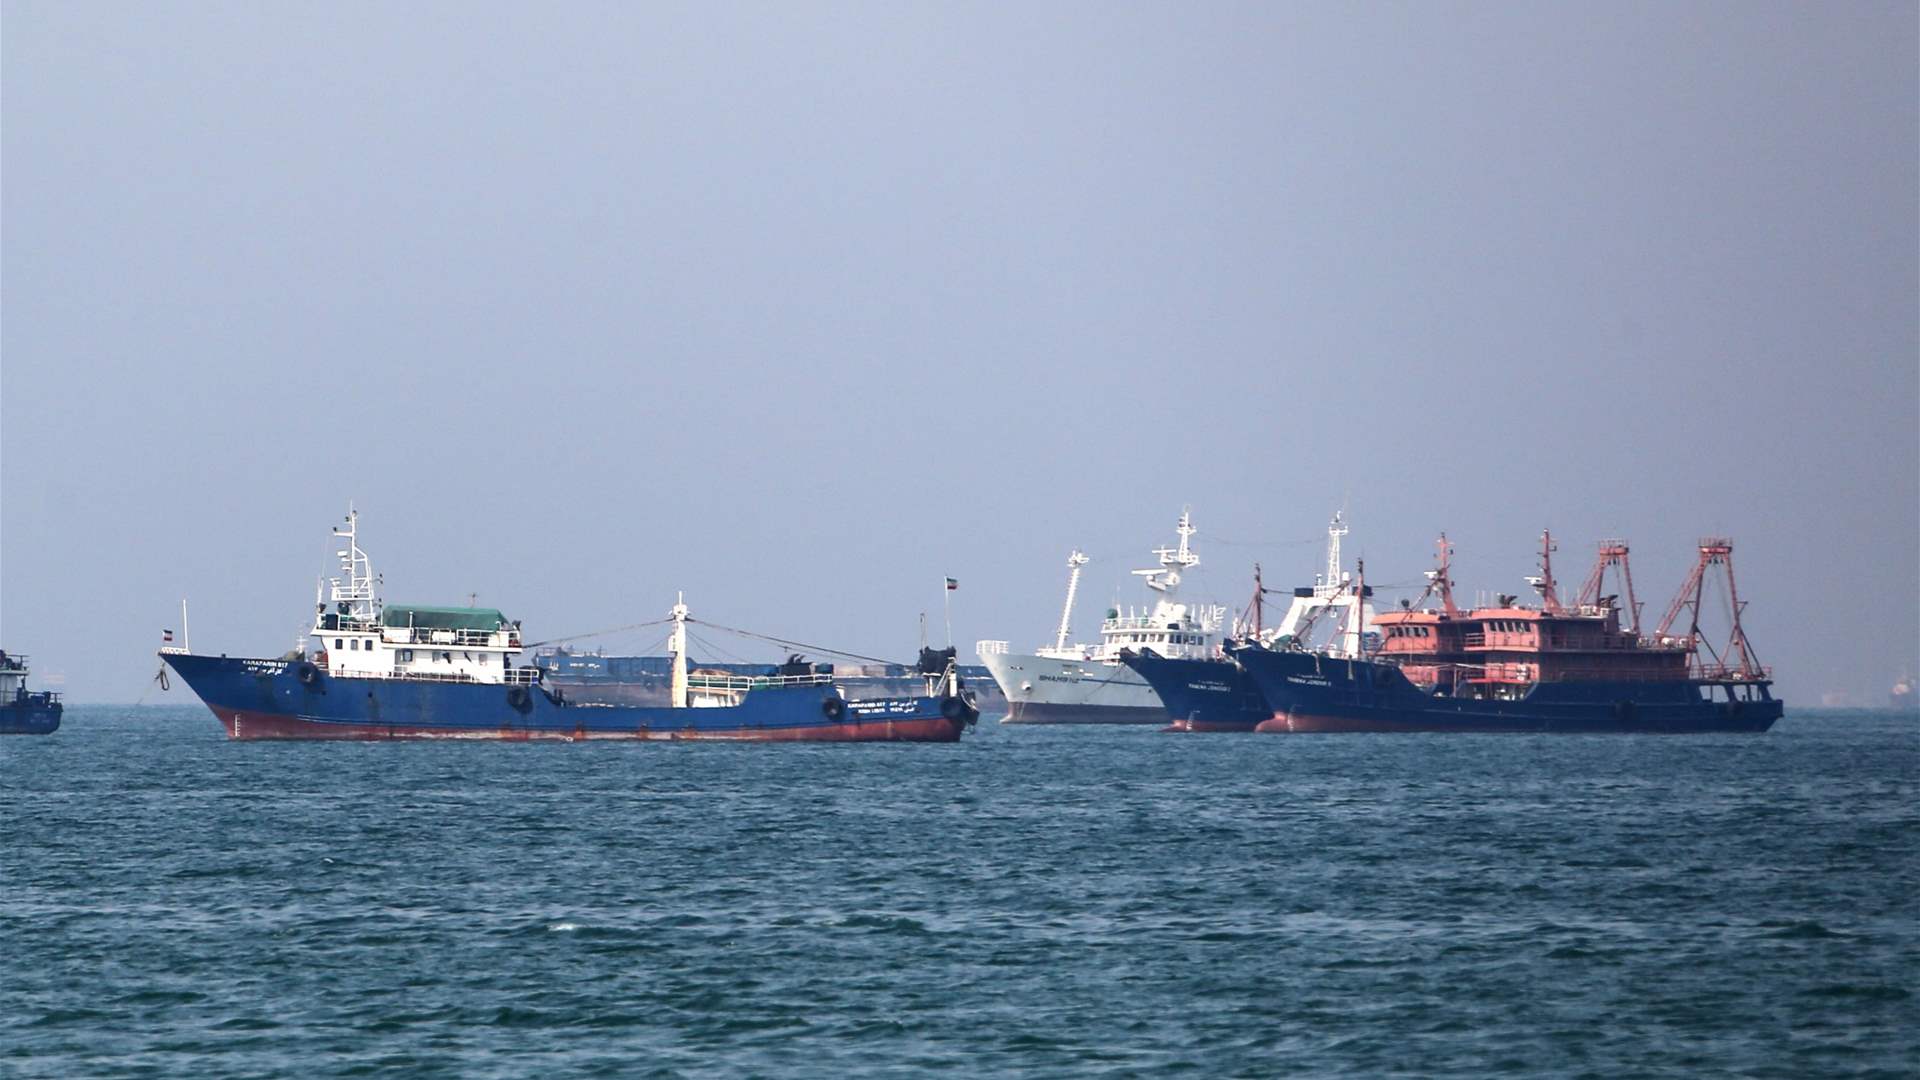 Vessel seized in Strait of Hormuz